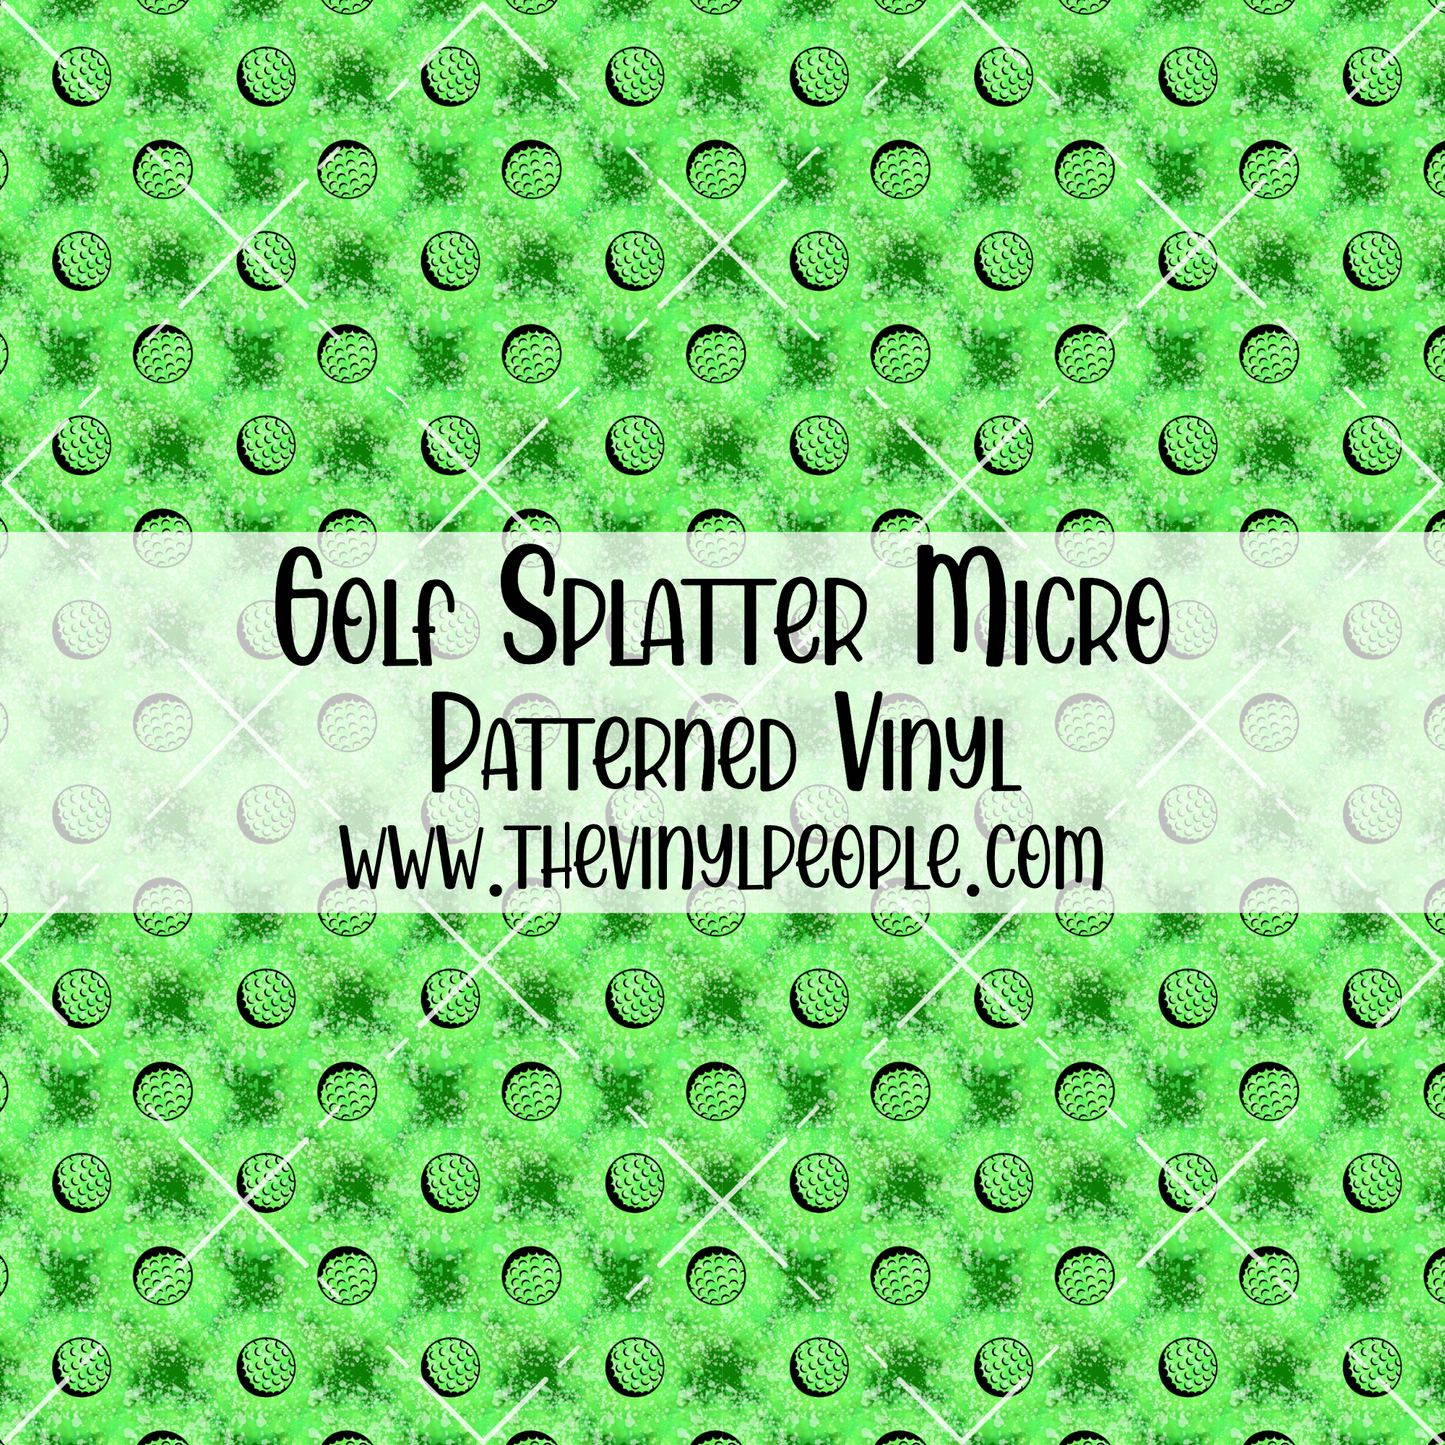 Golf Splatter Patterned Vinyl